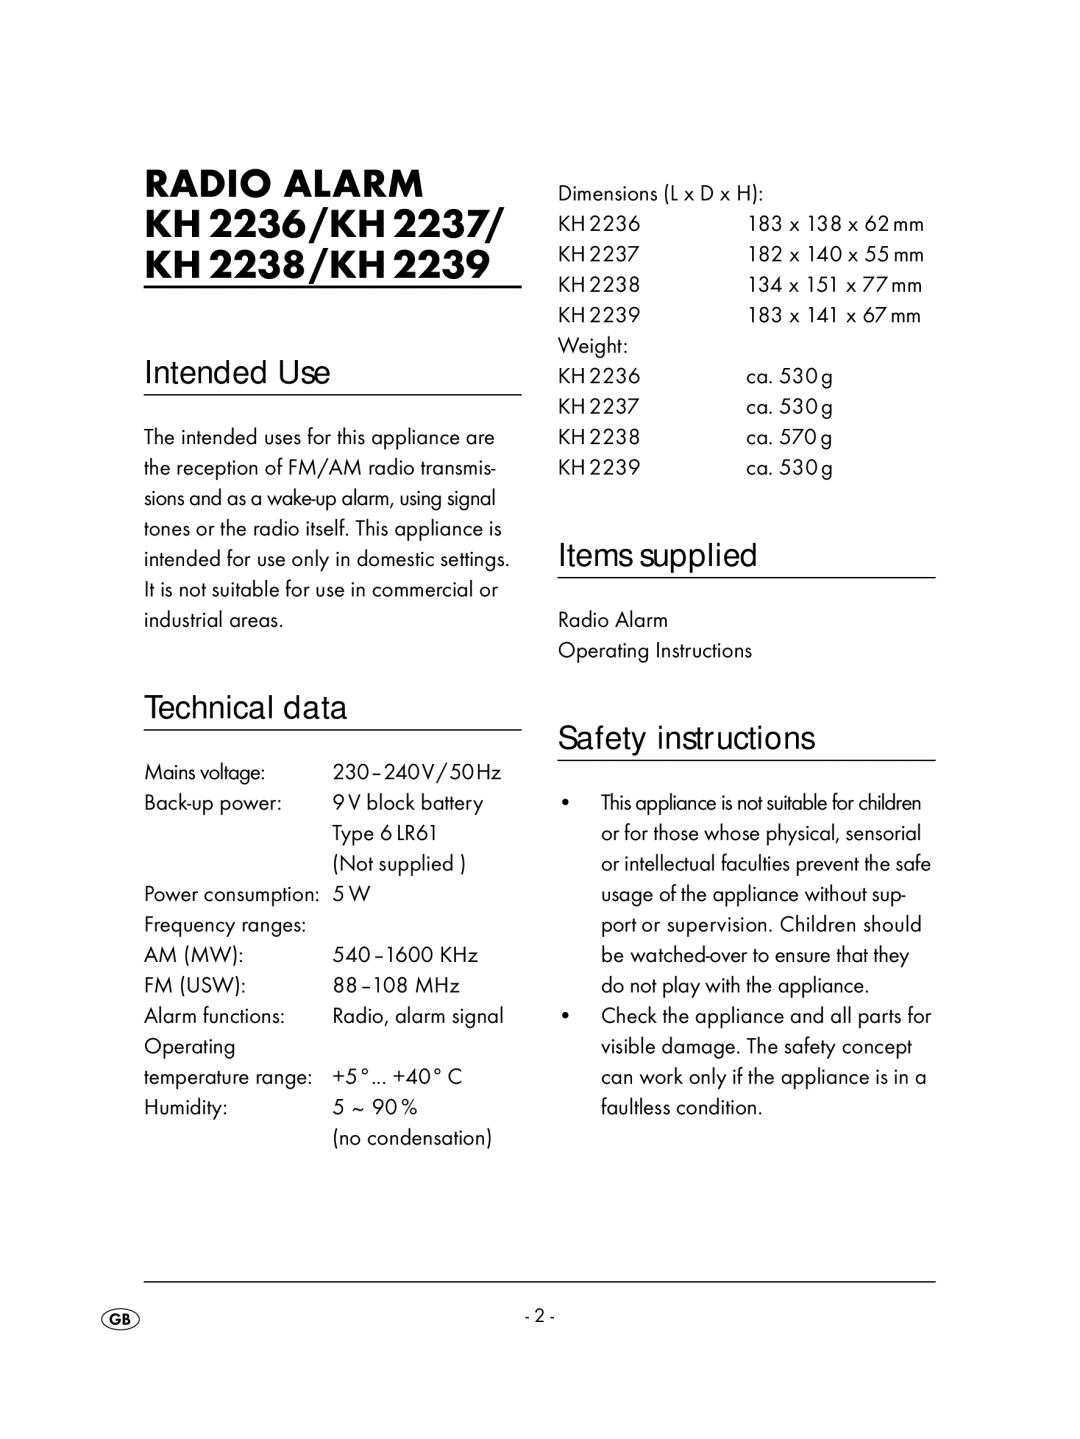 Kompernass KH 2239, KH 2237, KH 2238, KH 2257 Radio Alarm, Intended Use, Items supplied, Technical data Safety instructions 